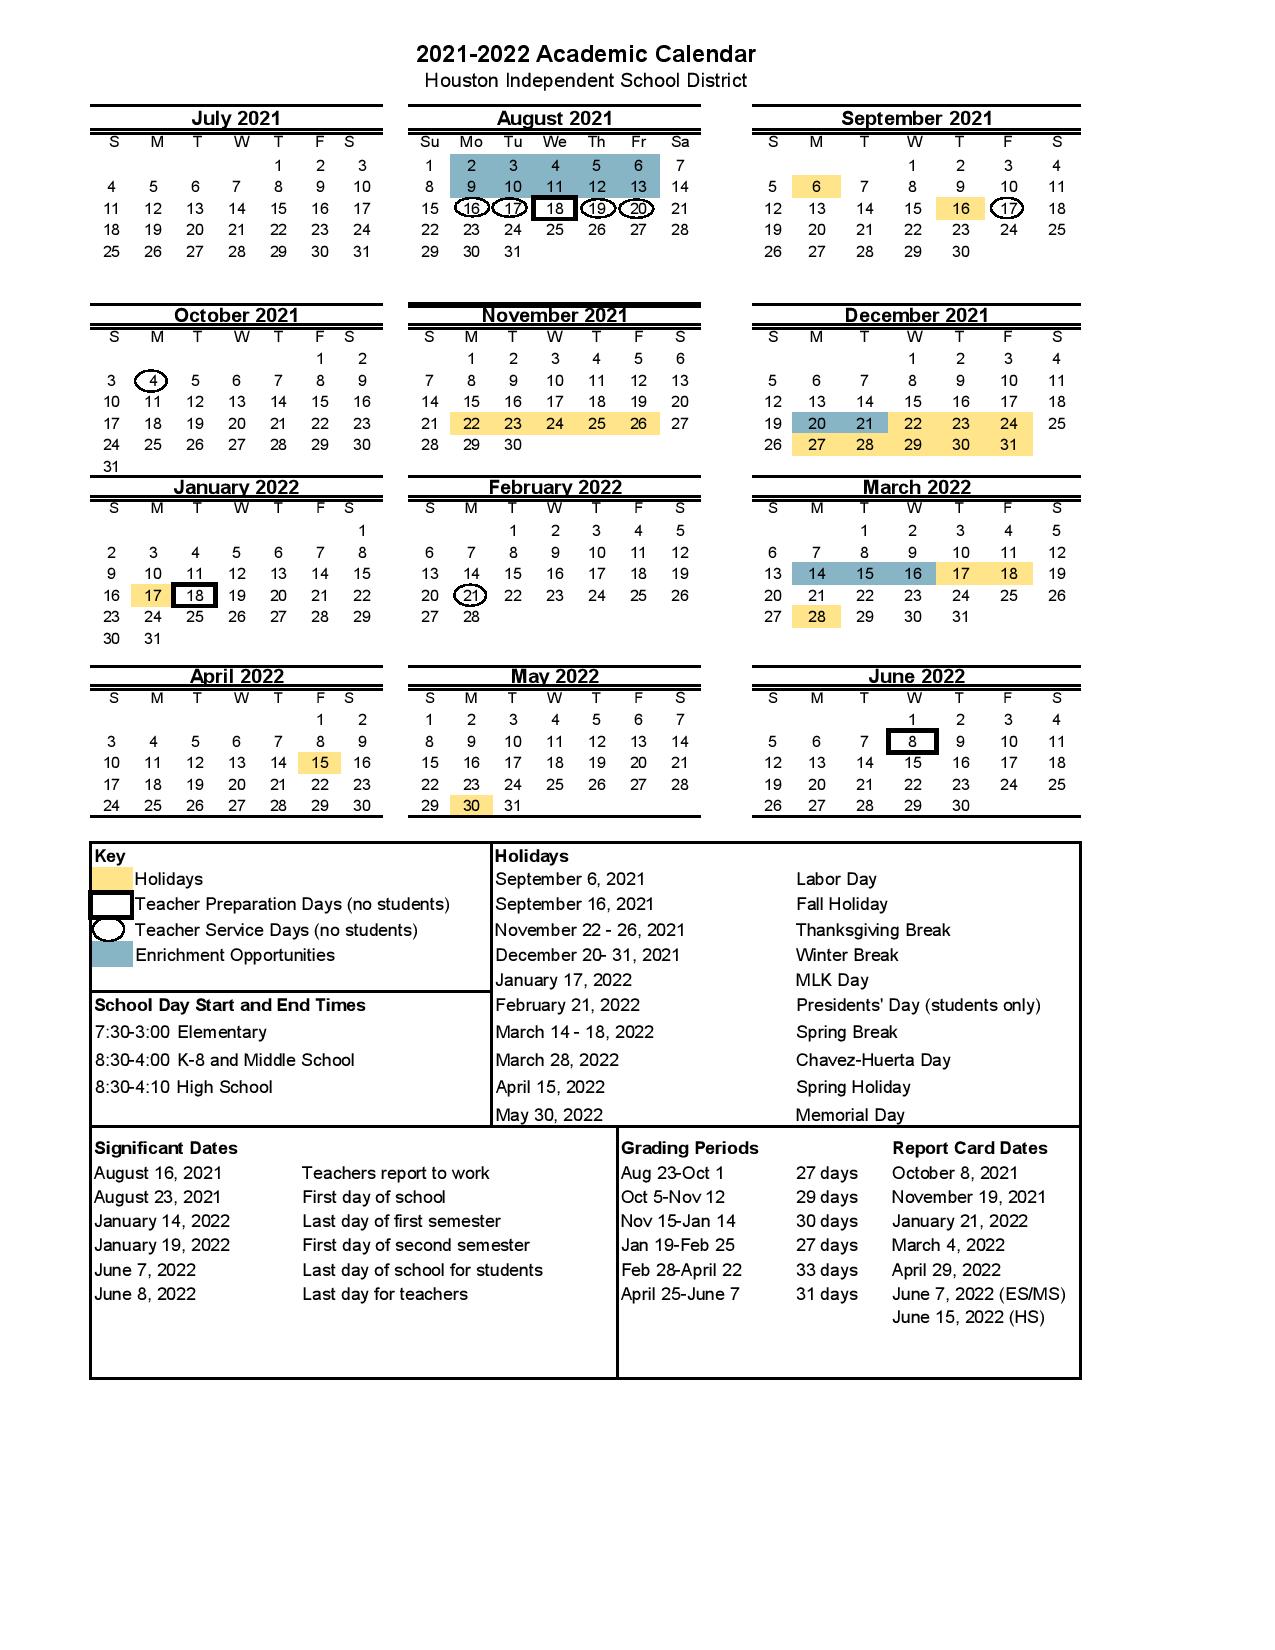 Houston Independent School District Calendar 2021 2022